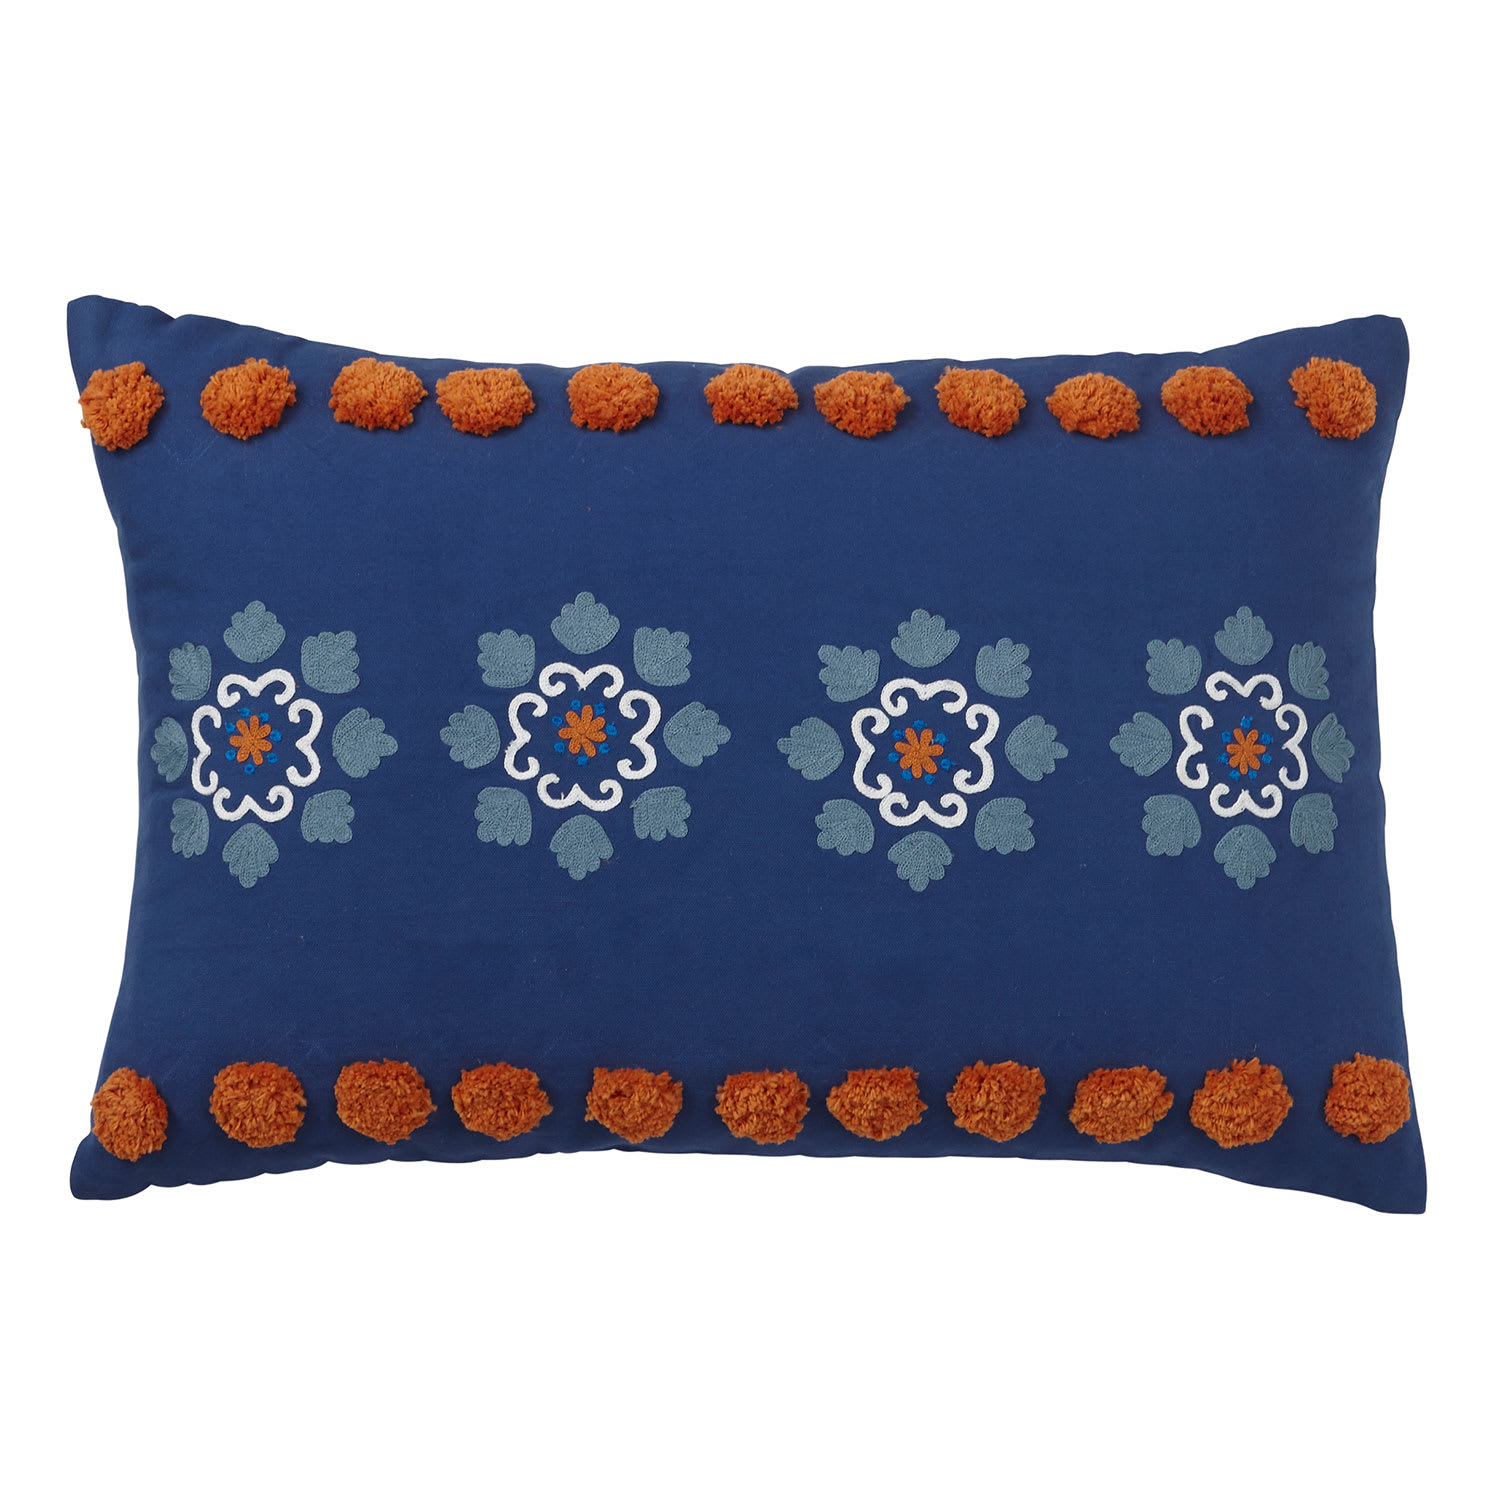 Cstudio Home Carlotta Decorative Pillow Cover - Floral